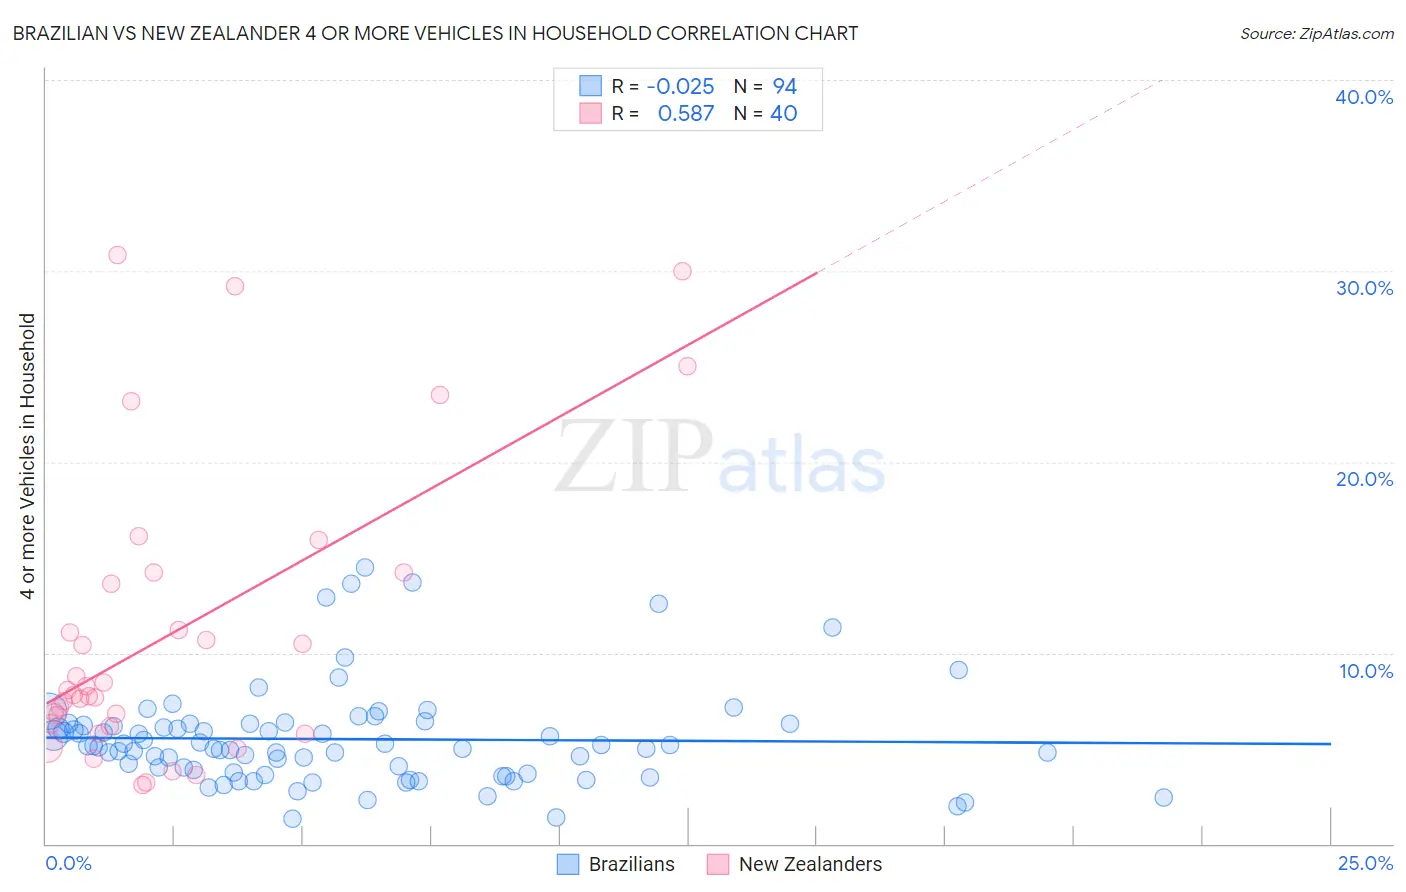 Brazilian vs New Zealander 4 or more Vehicles in Household